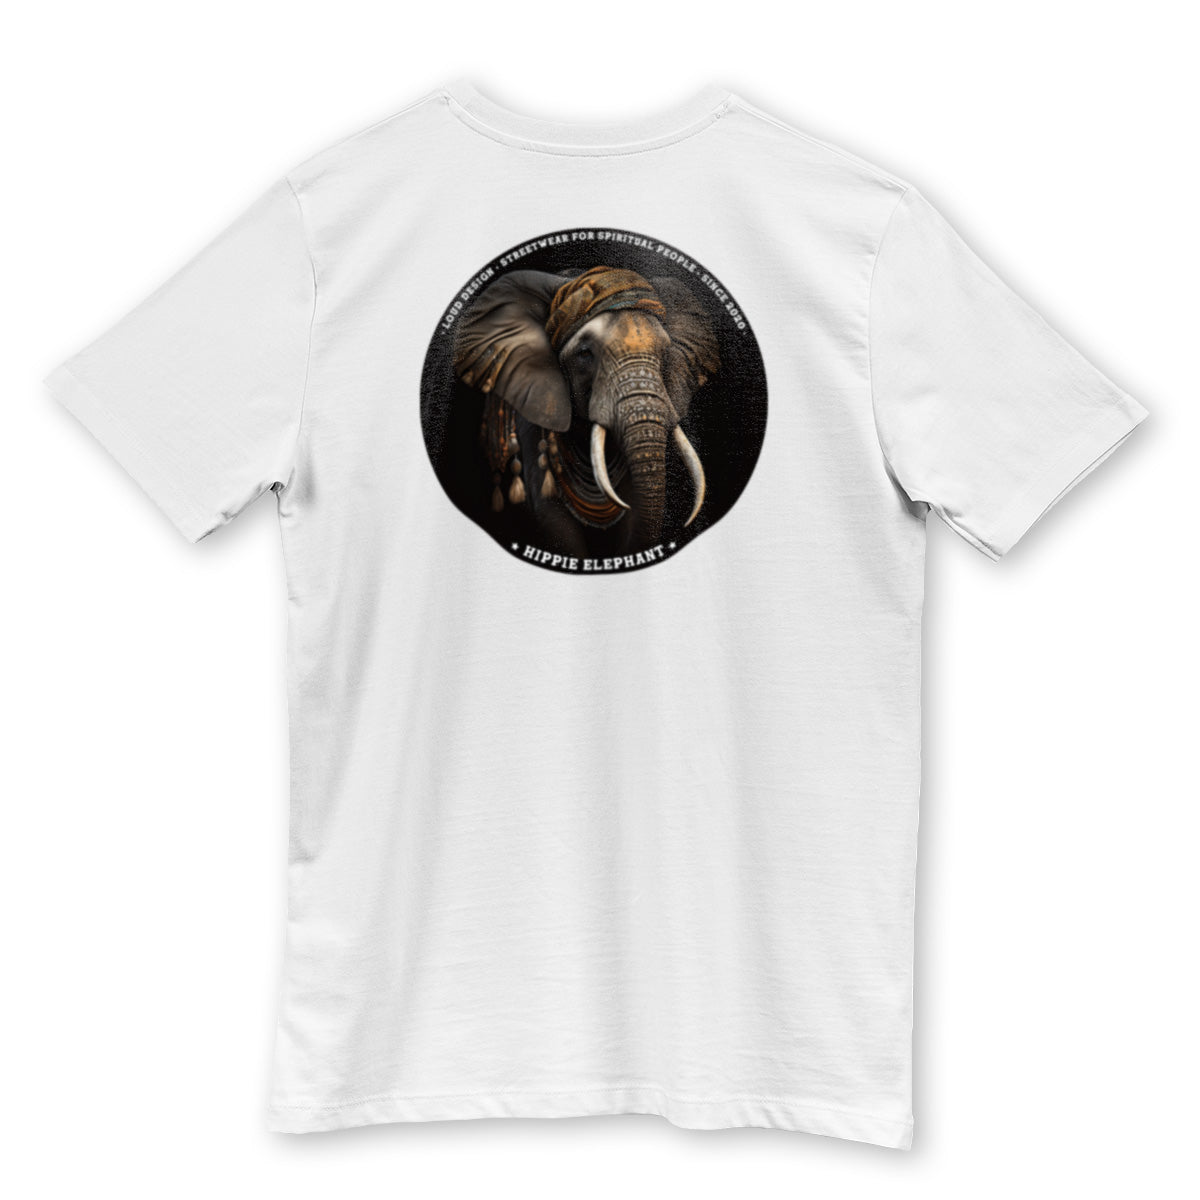 Unisex T-shirt "Hippie Elephant"